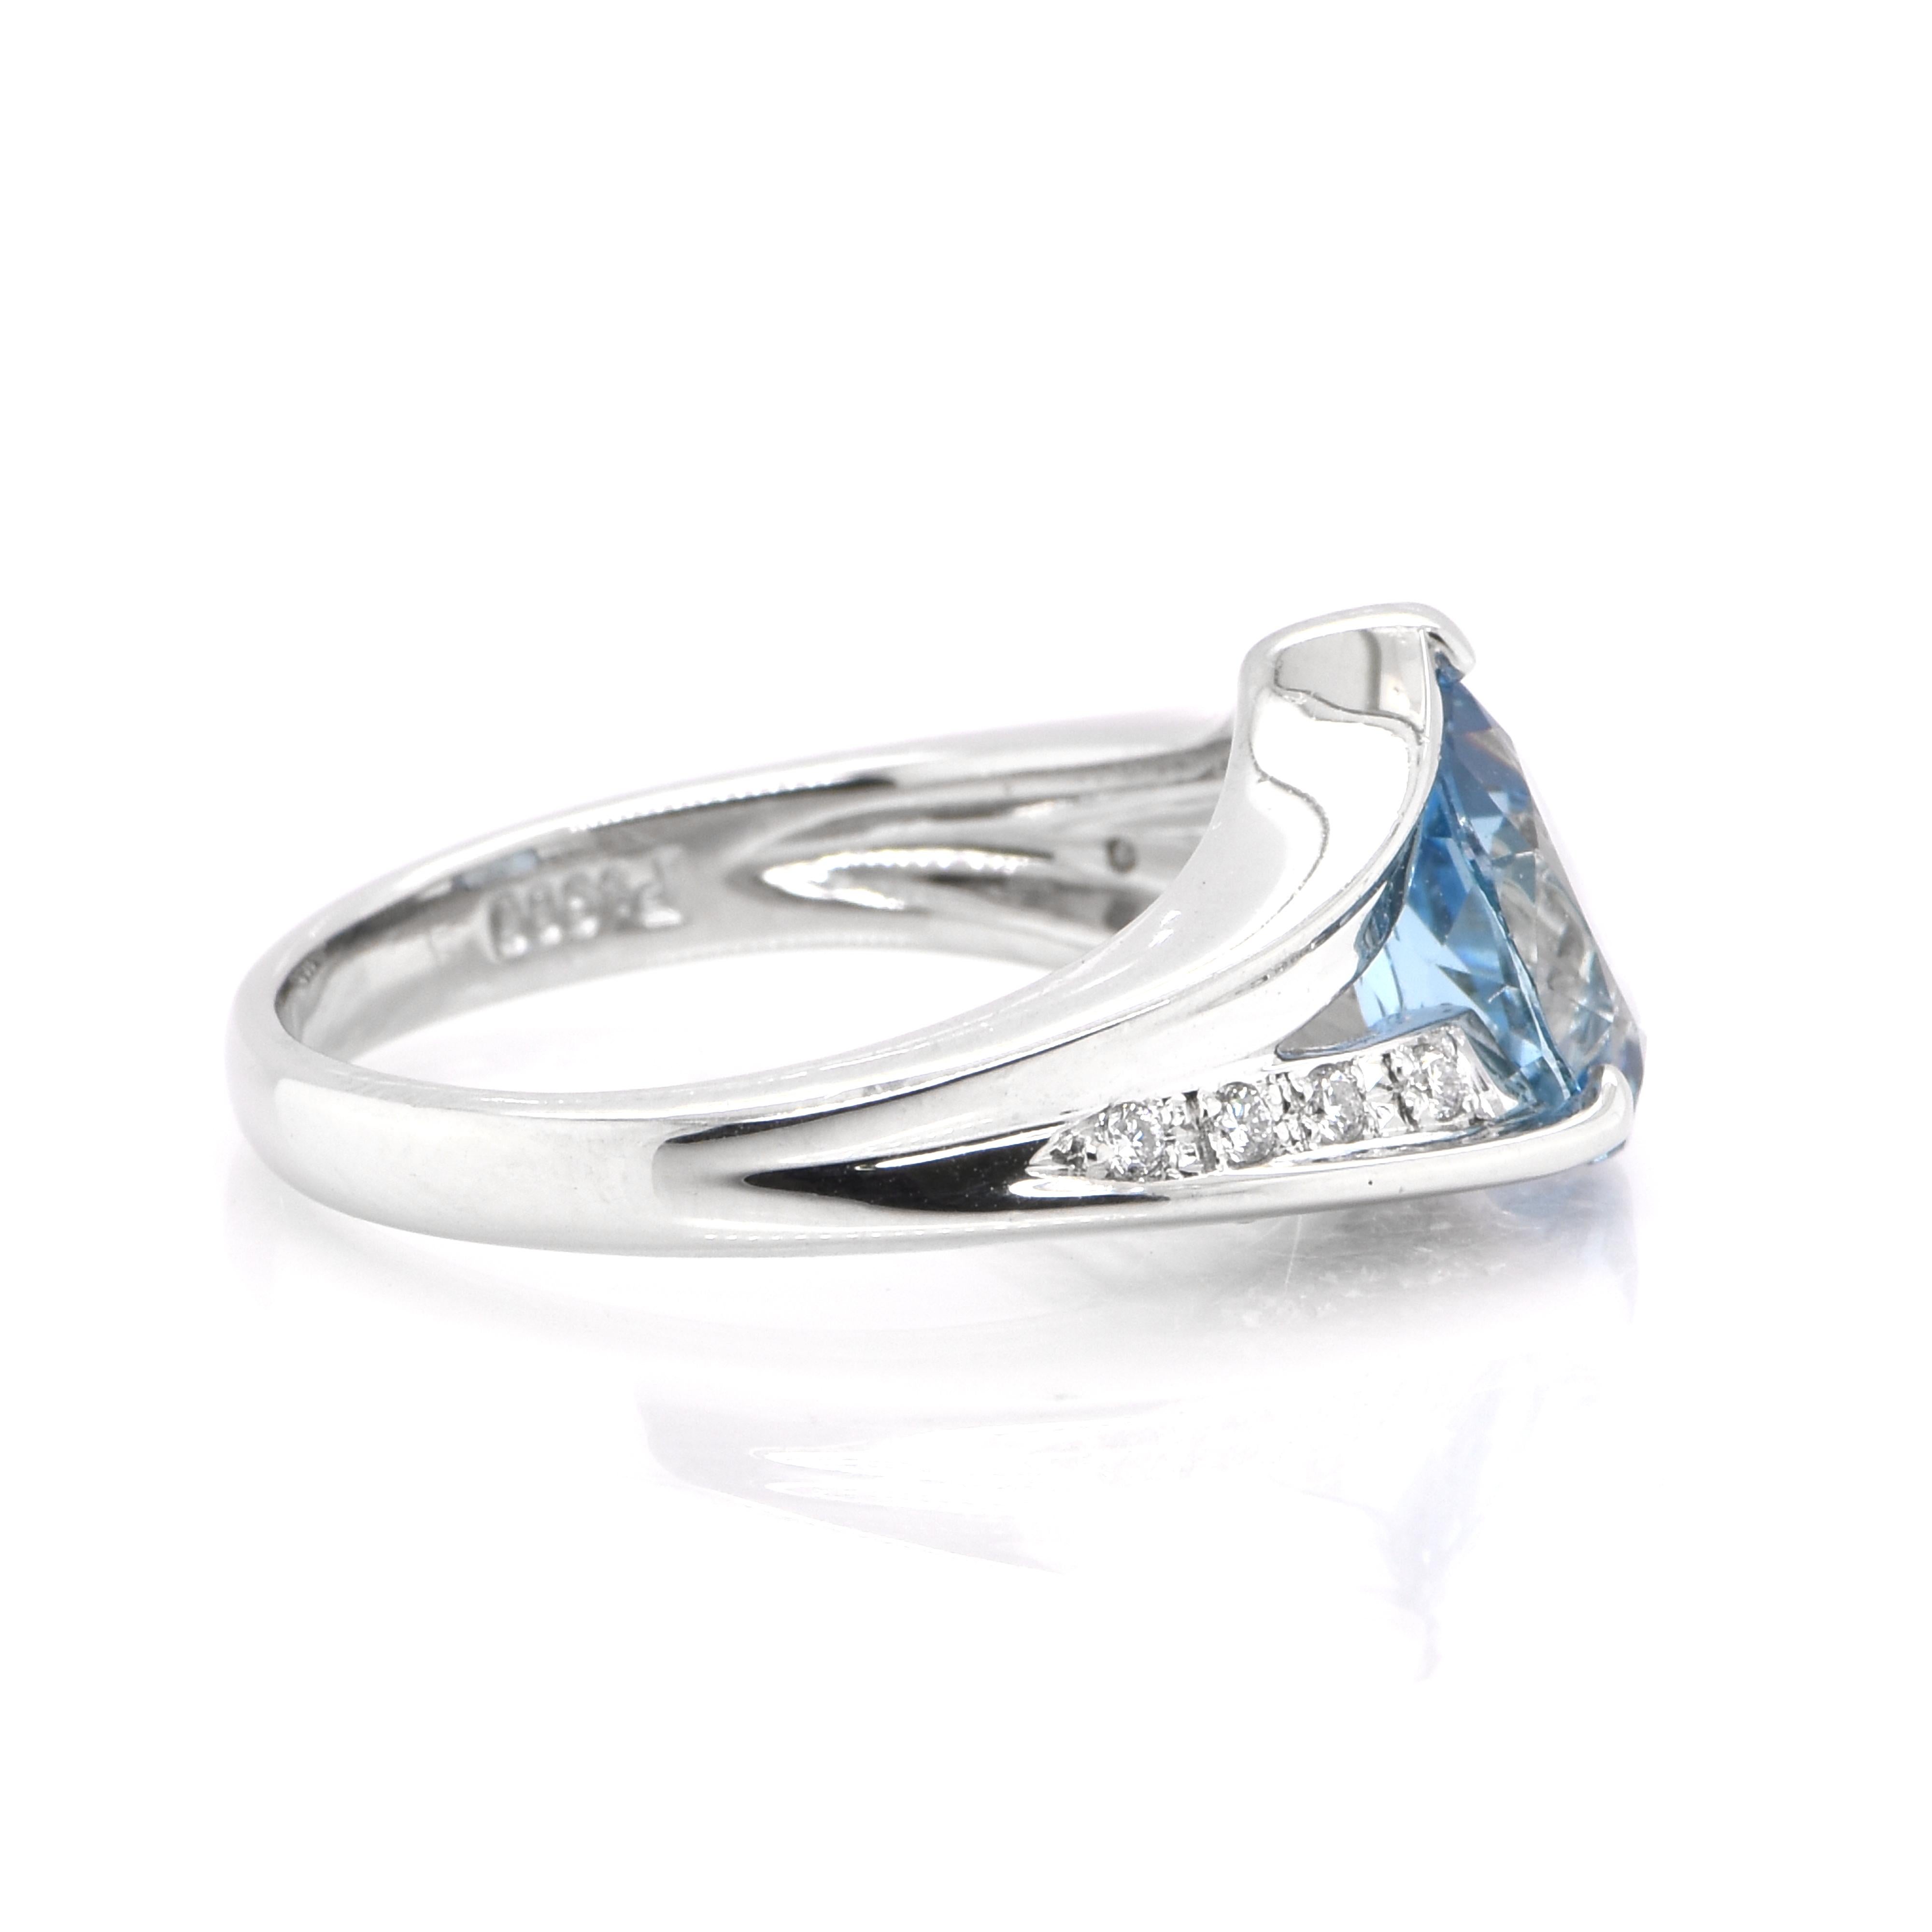 Pear Cut 1.51 Carat Natural Santa-Maria Aquamarine and Diamond Ring set in Platinum For Sale